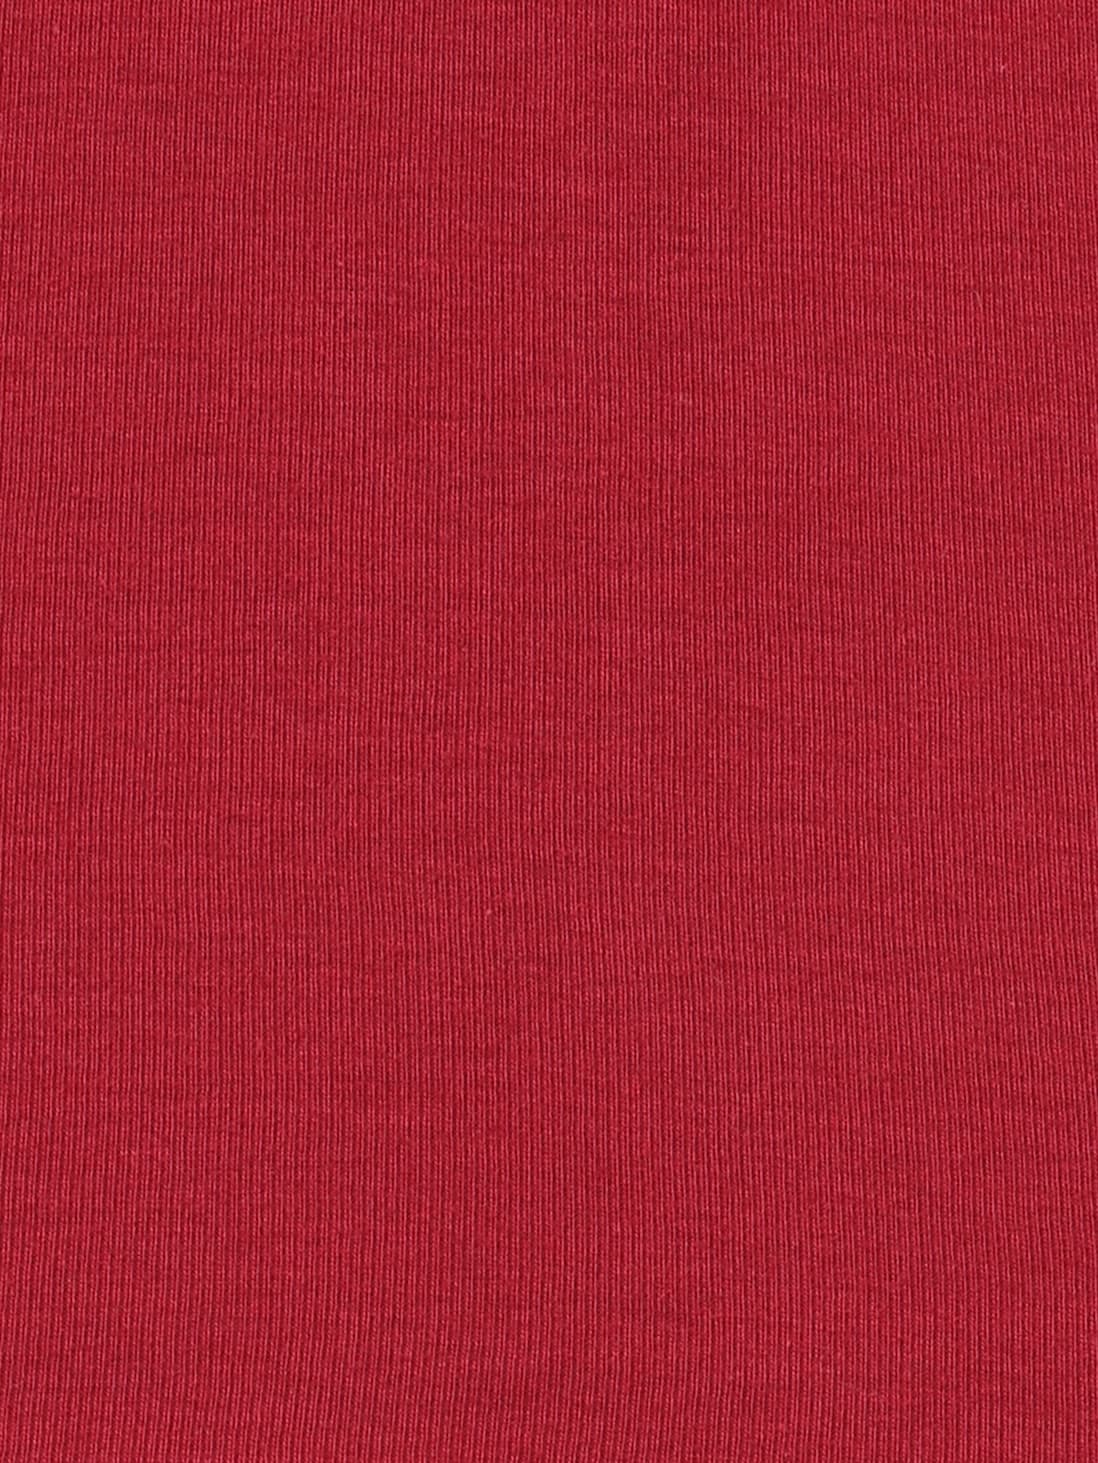 Buy Men's Super Combed Cotton Rib Square Neckline Gym Vest - Red Pepper ...